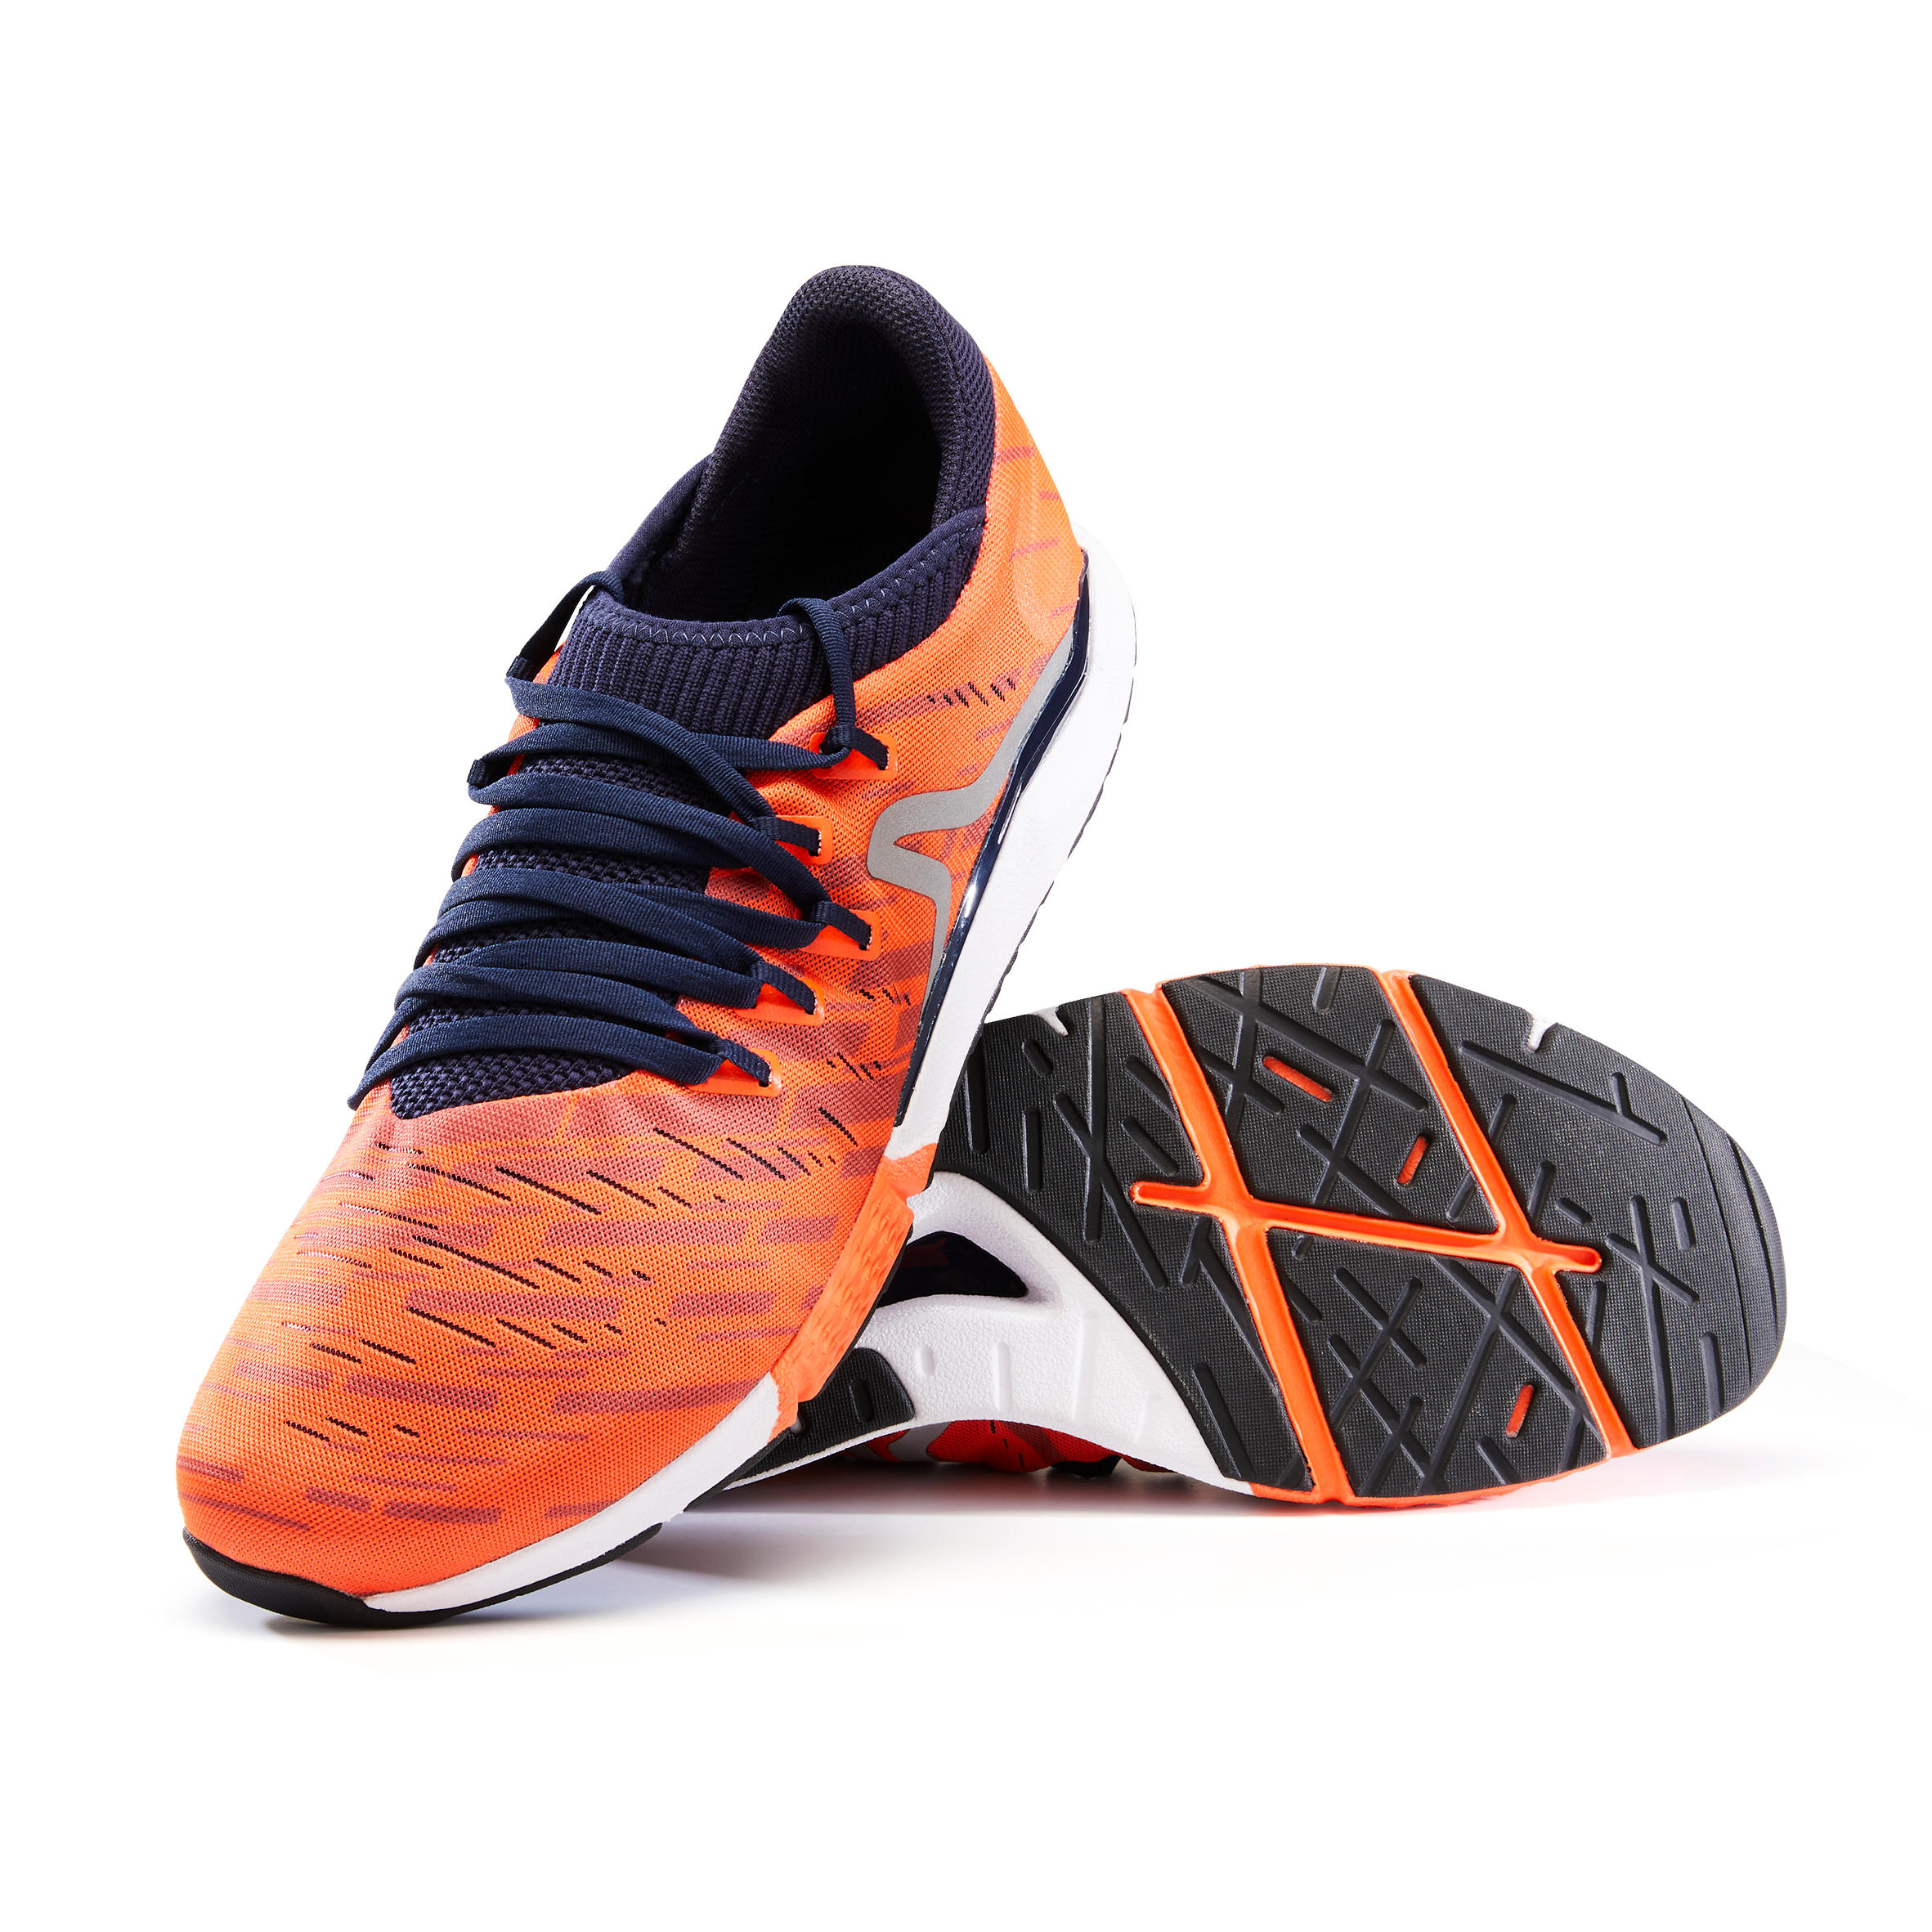 RW 900 Race fitness walking shoes - orange 12/12